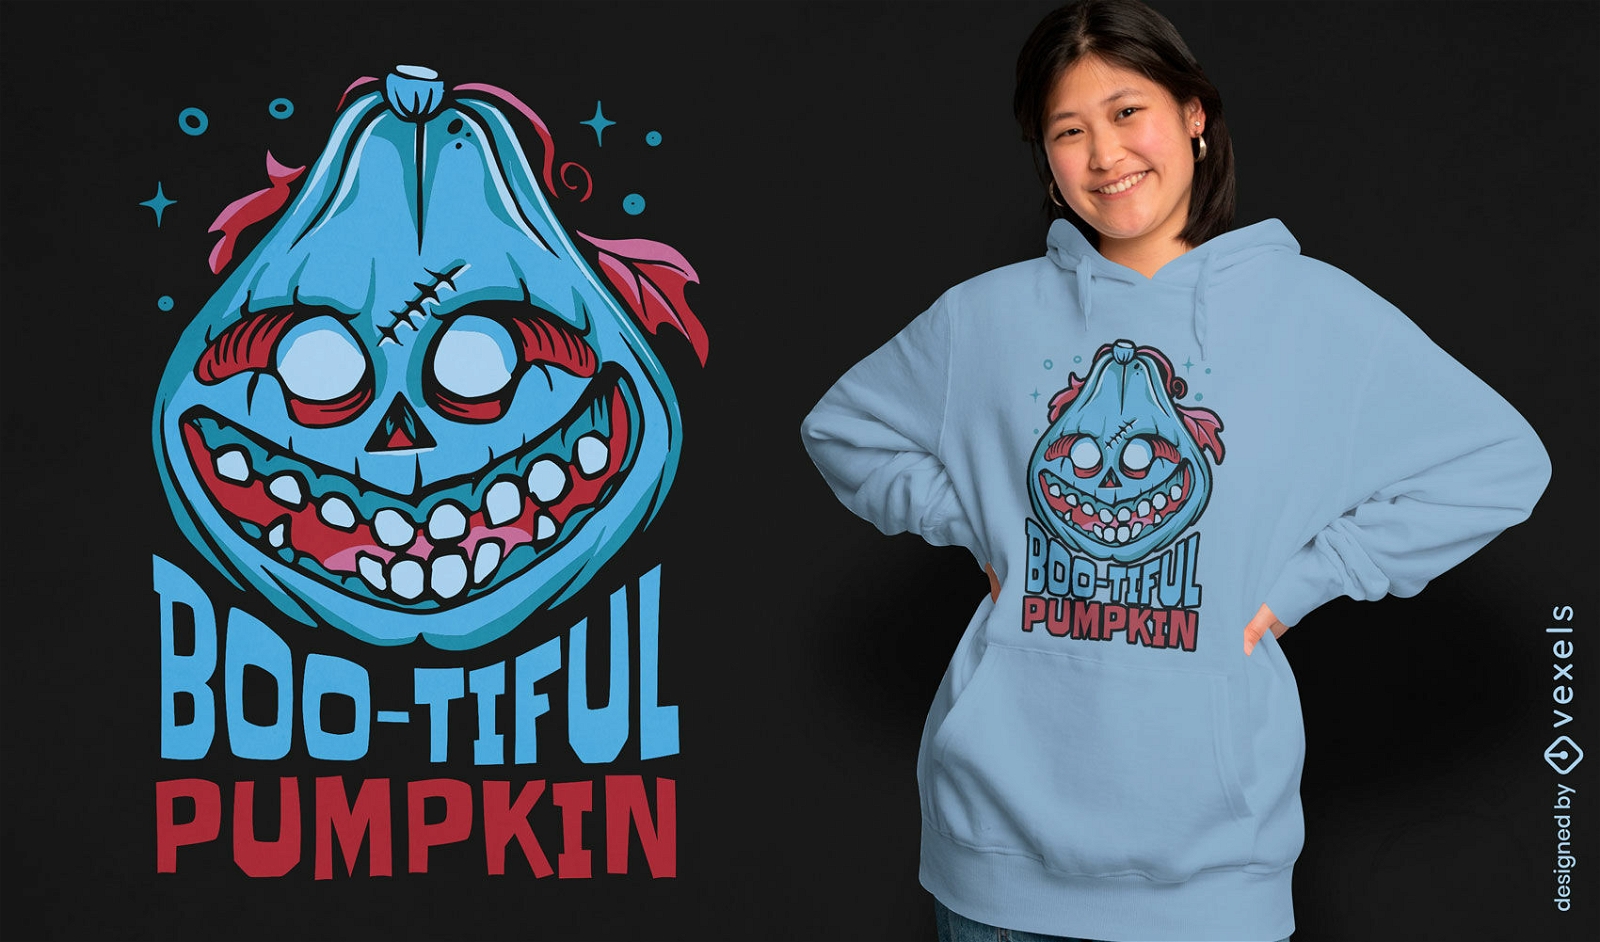 Boo-tiful pumpkin t-shirt design